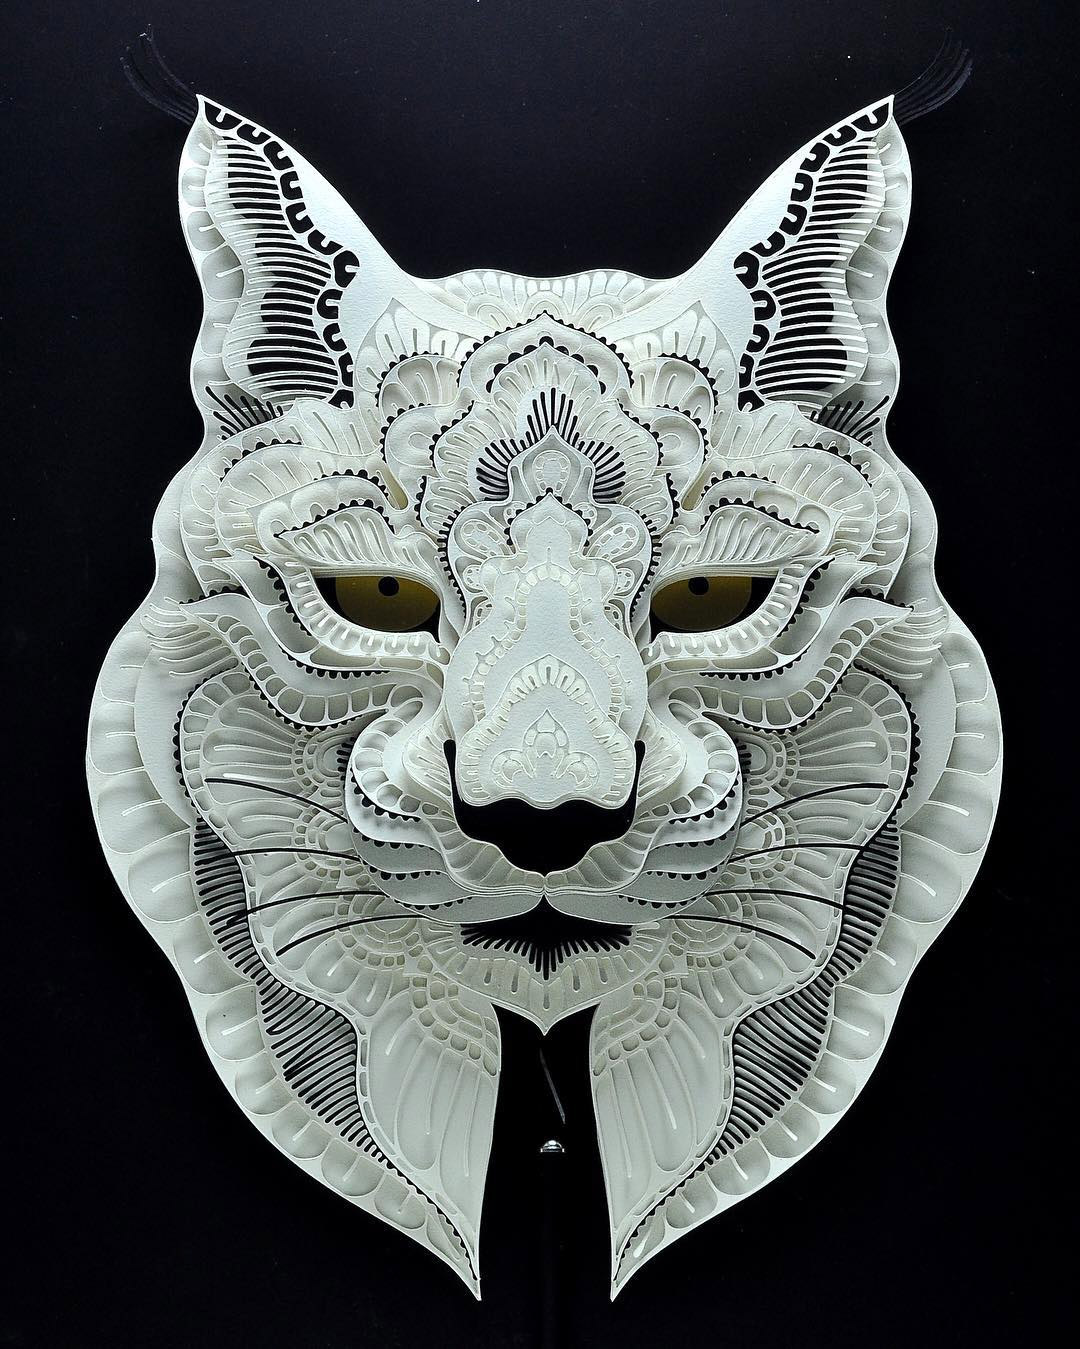 Patrick Cabral细腻传神的动物纸雕艺术